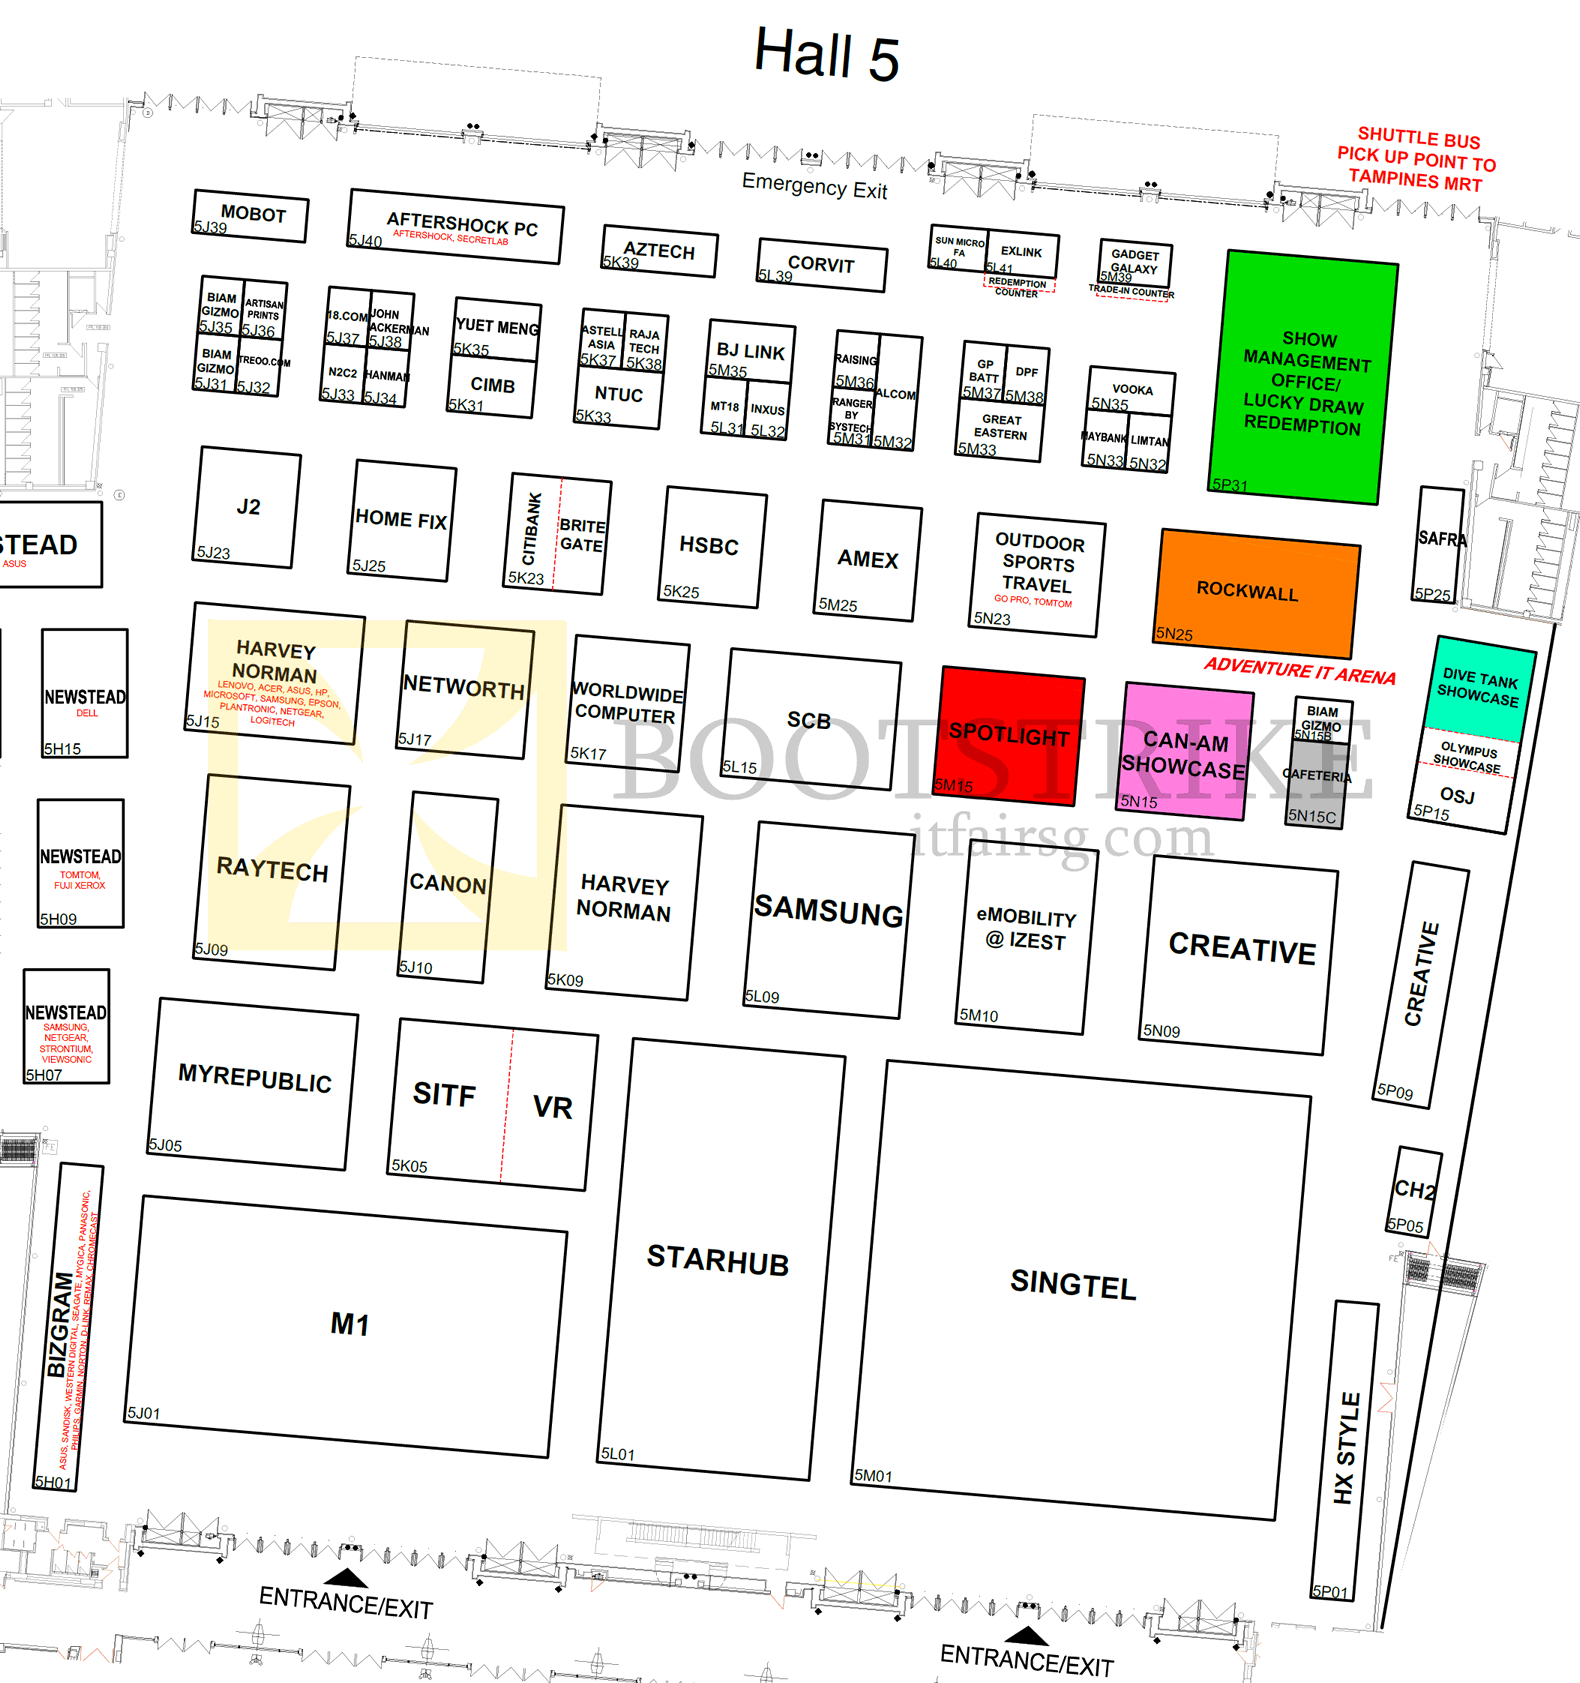 Floor Plan Map Hall 5, Singapore Expo SITEX 2015 » SITEX